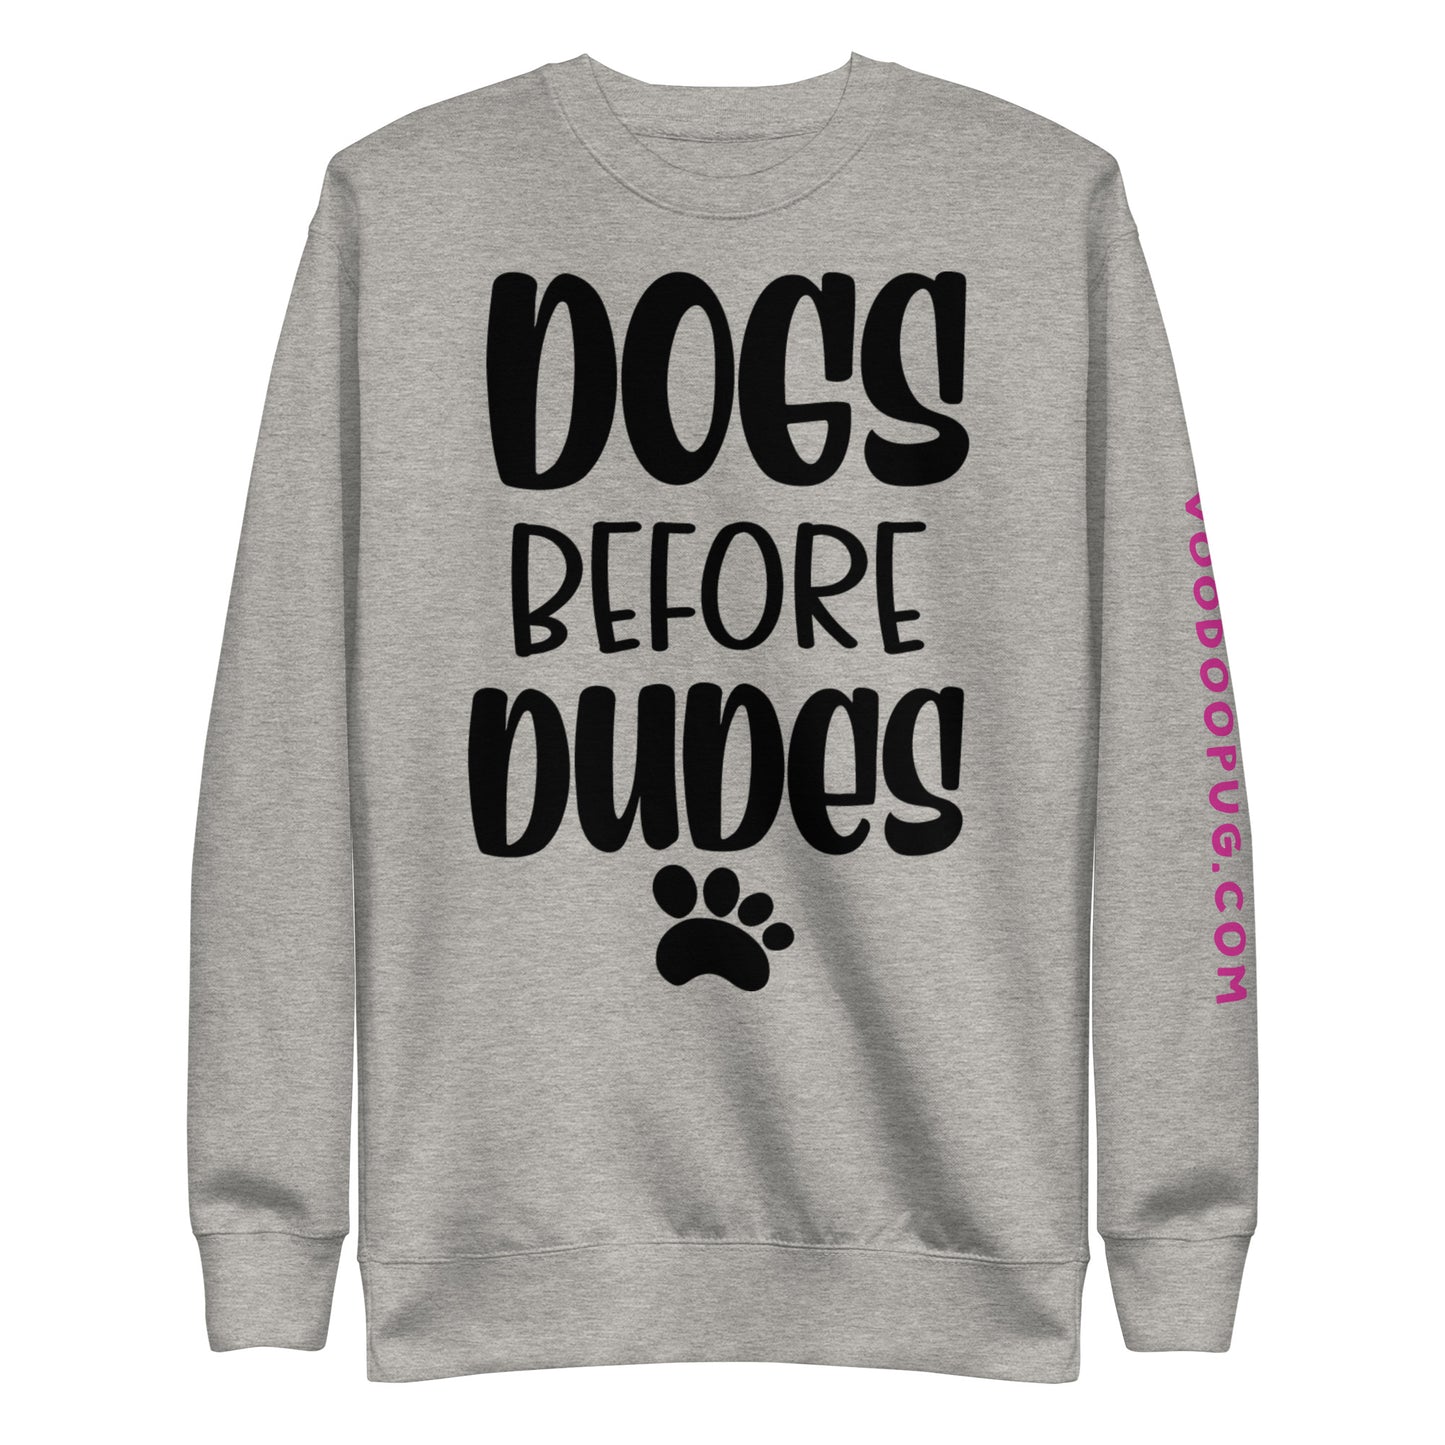 "Dogs before Dudes" Premium Sweatshirt